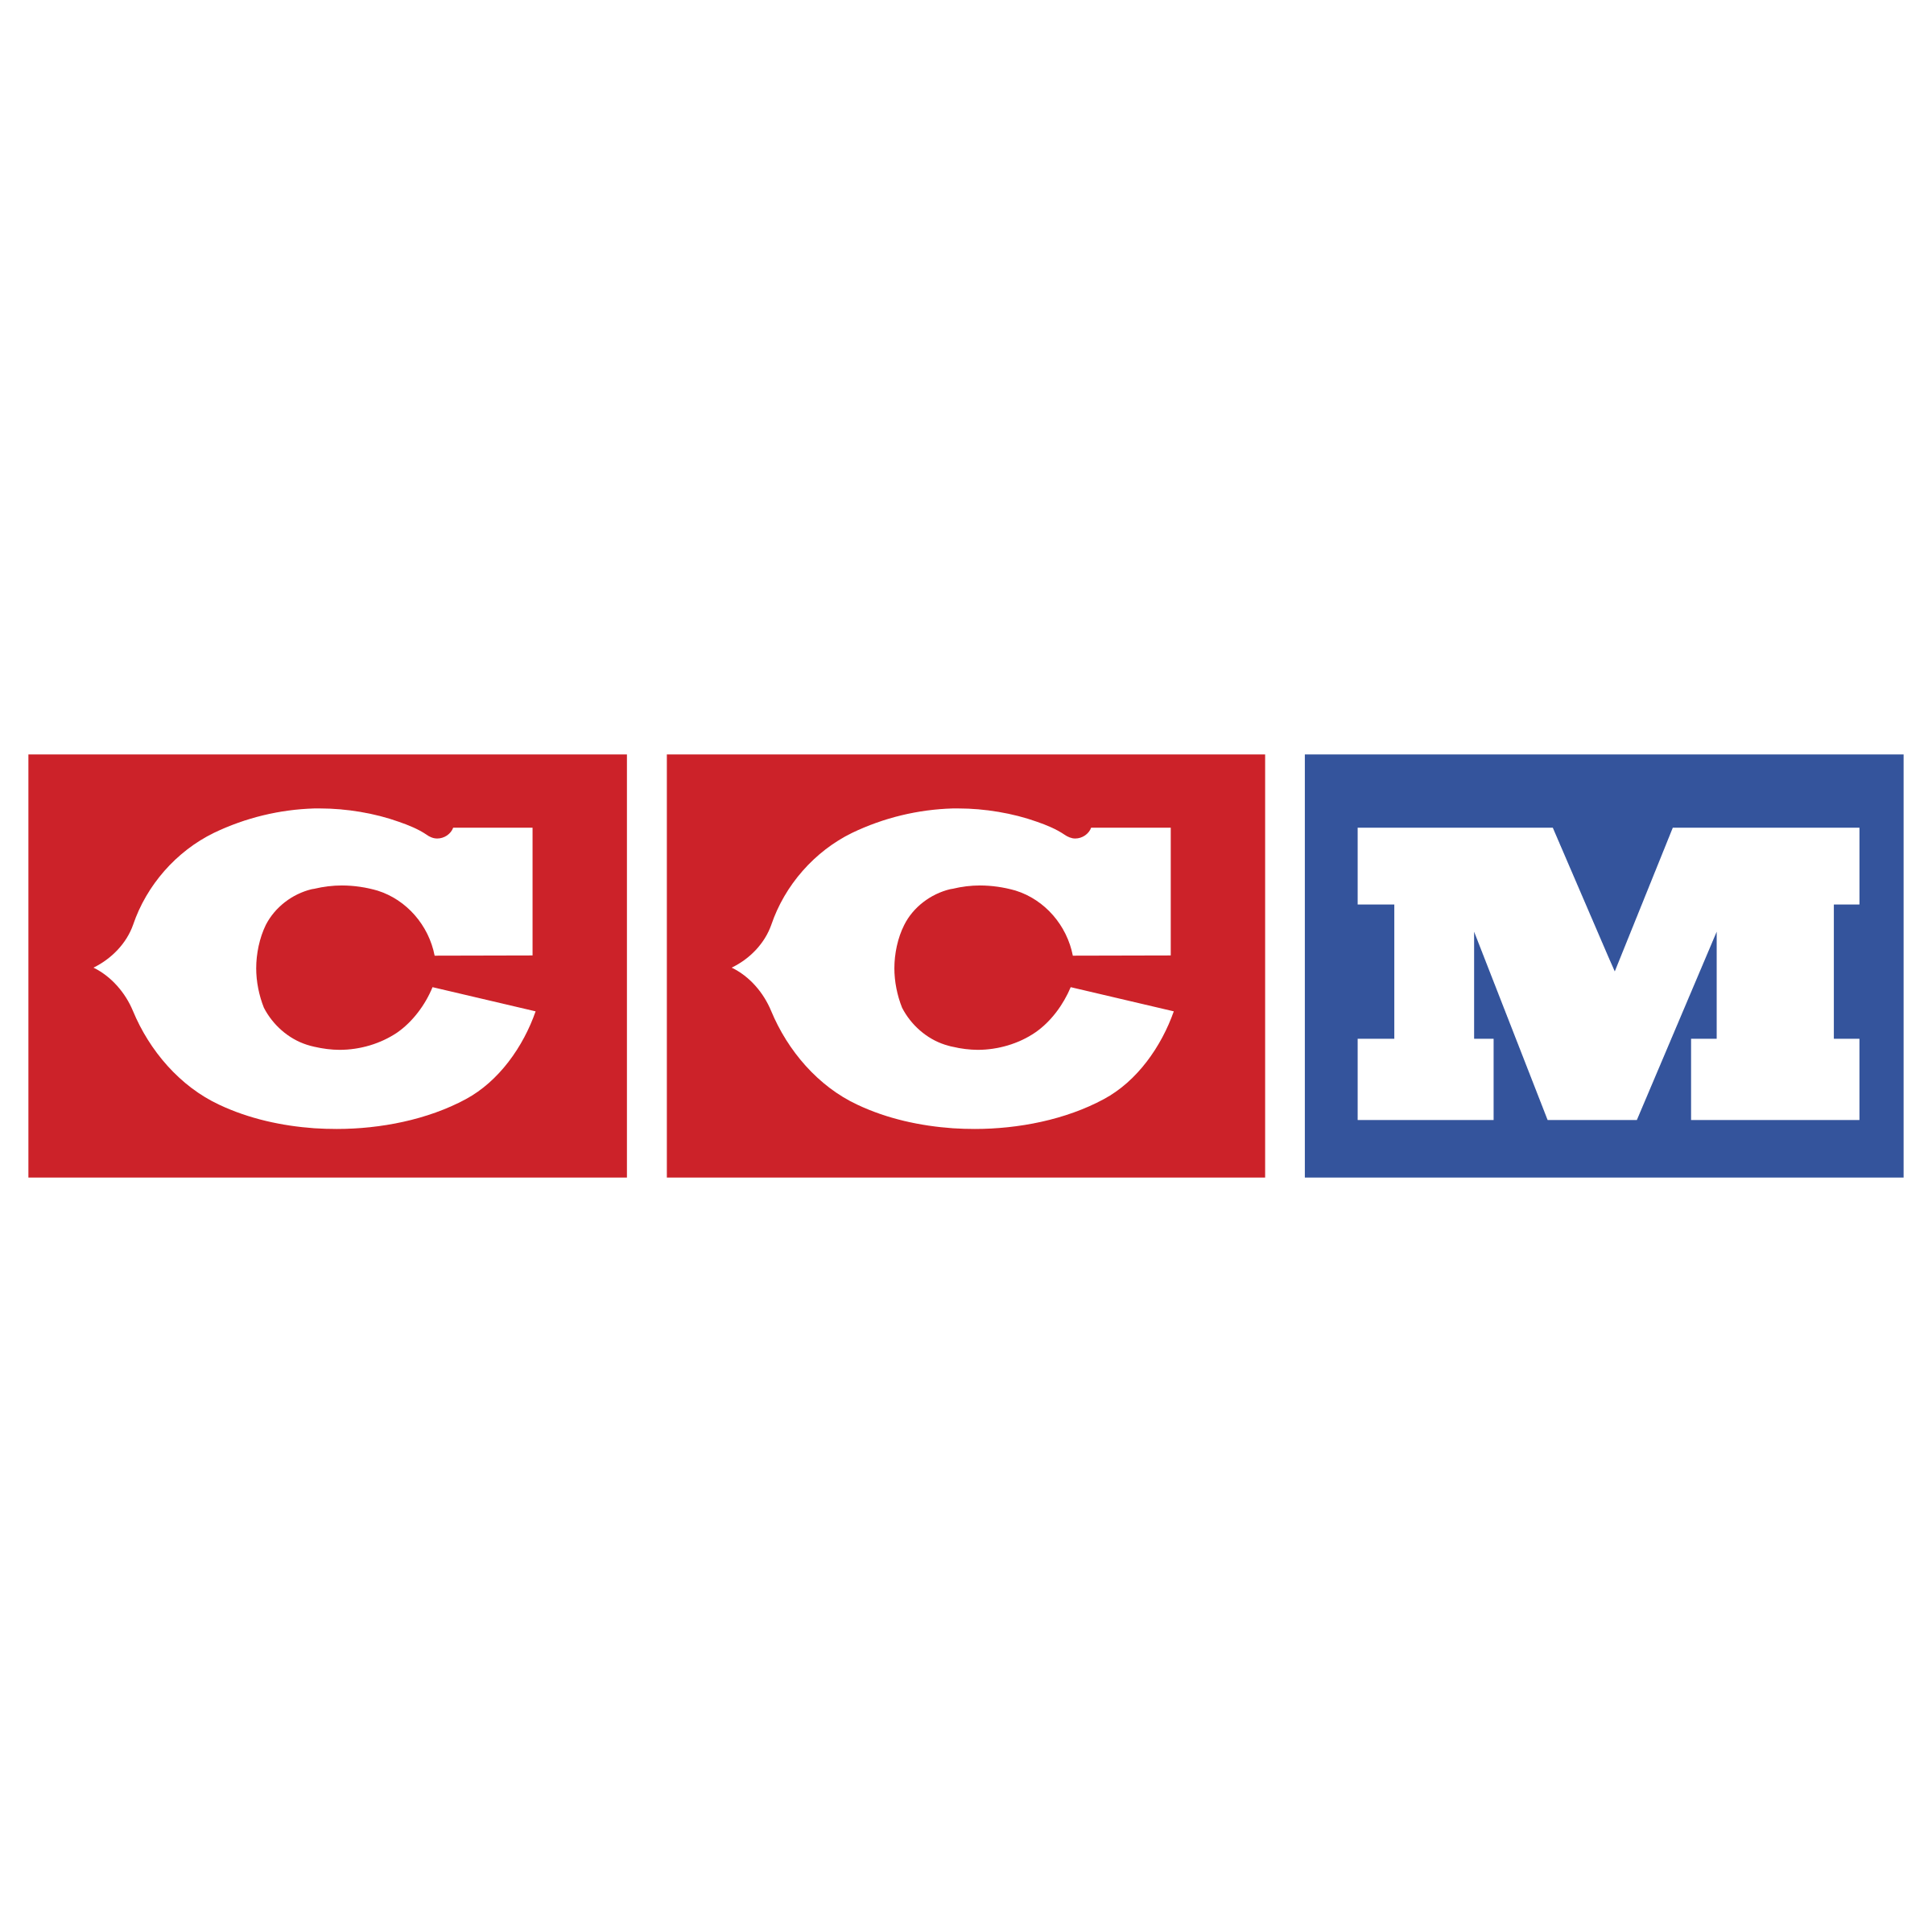 CCM Logo - CCM Logo PNG Transparent & SVG Vector - Freebie Supply